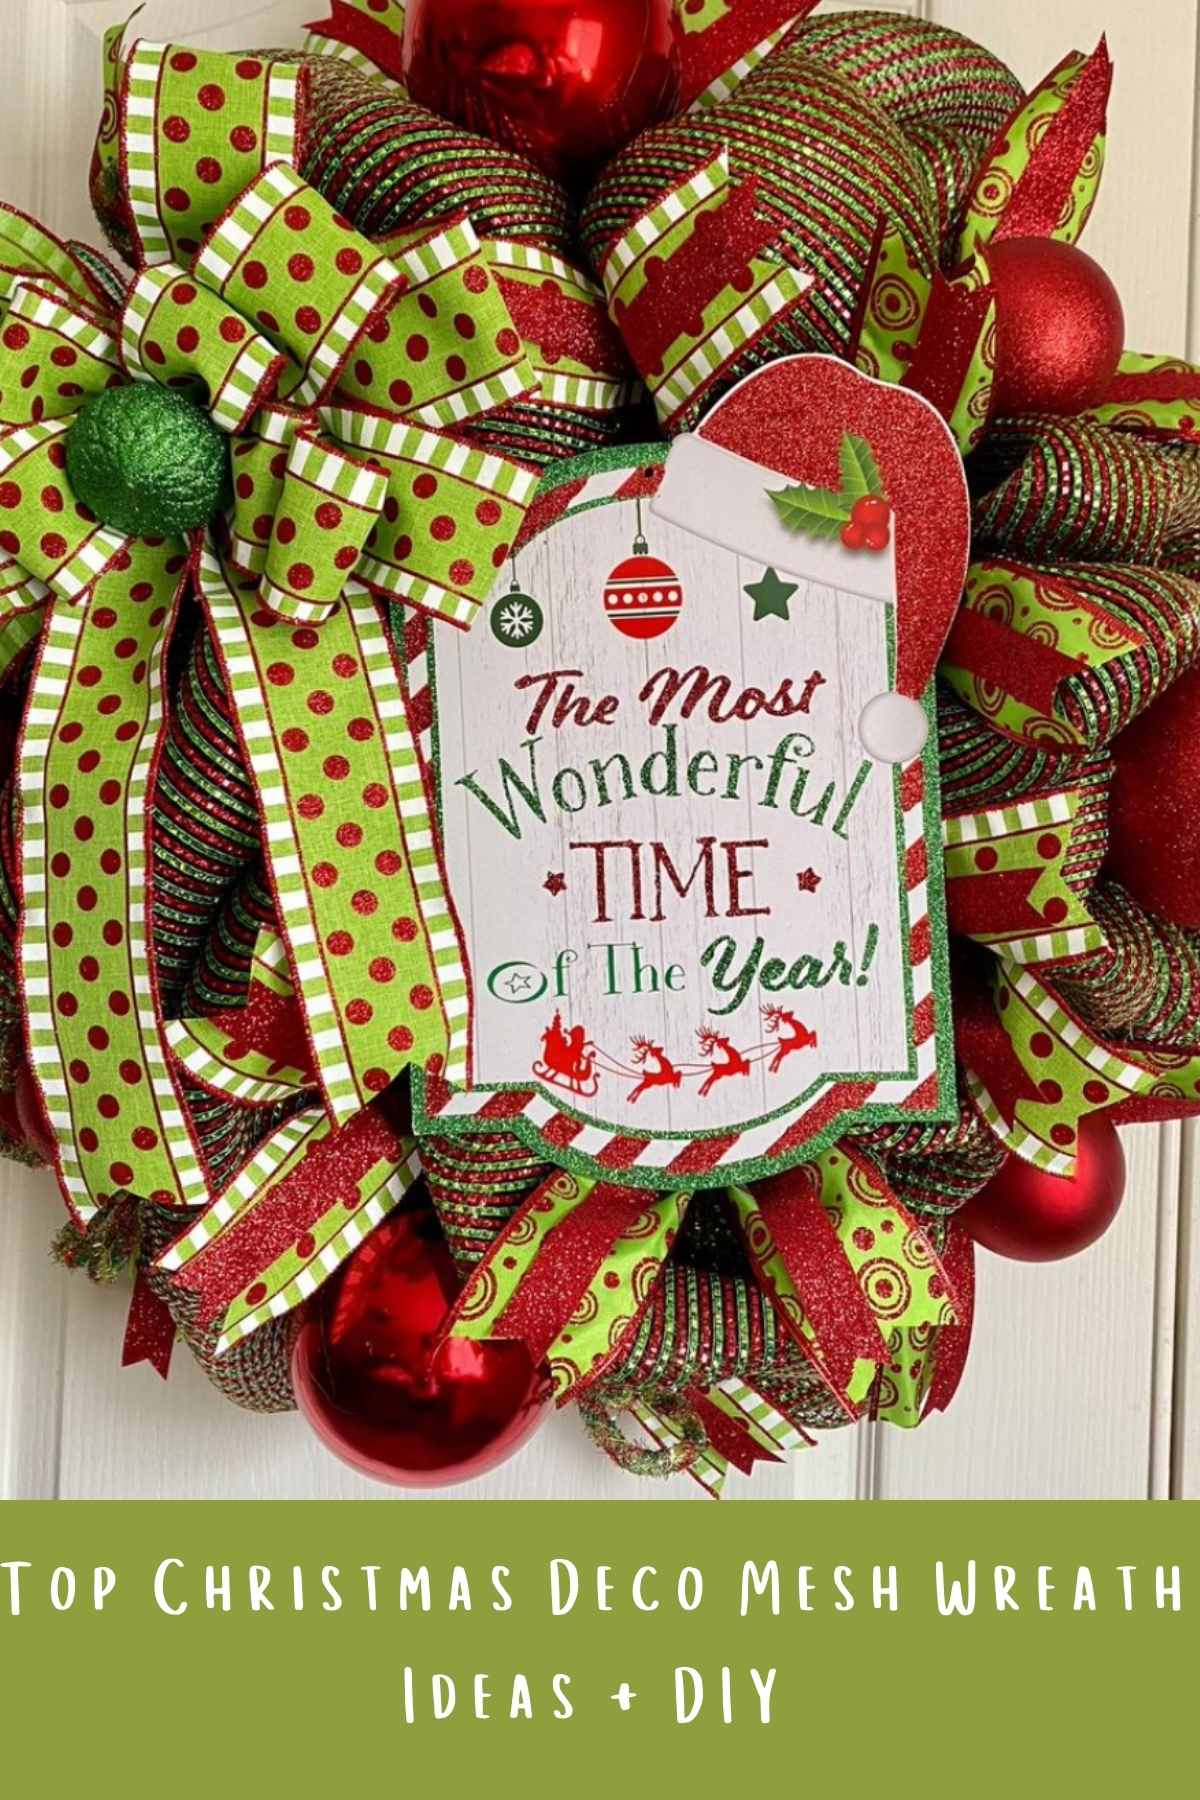 Top Christmas Deco Mesh Wreath Ideas